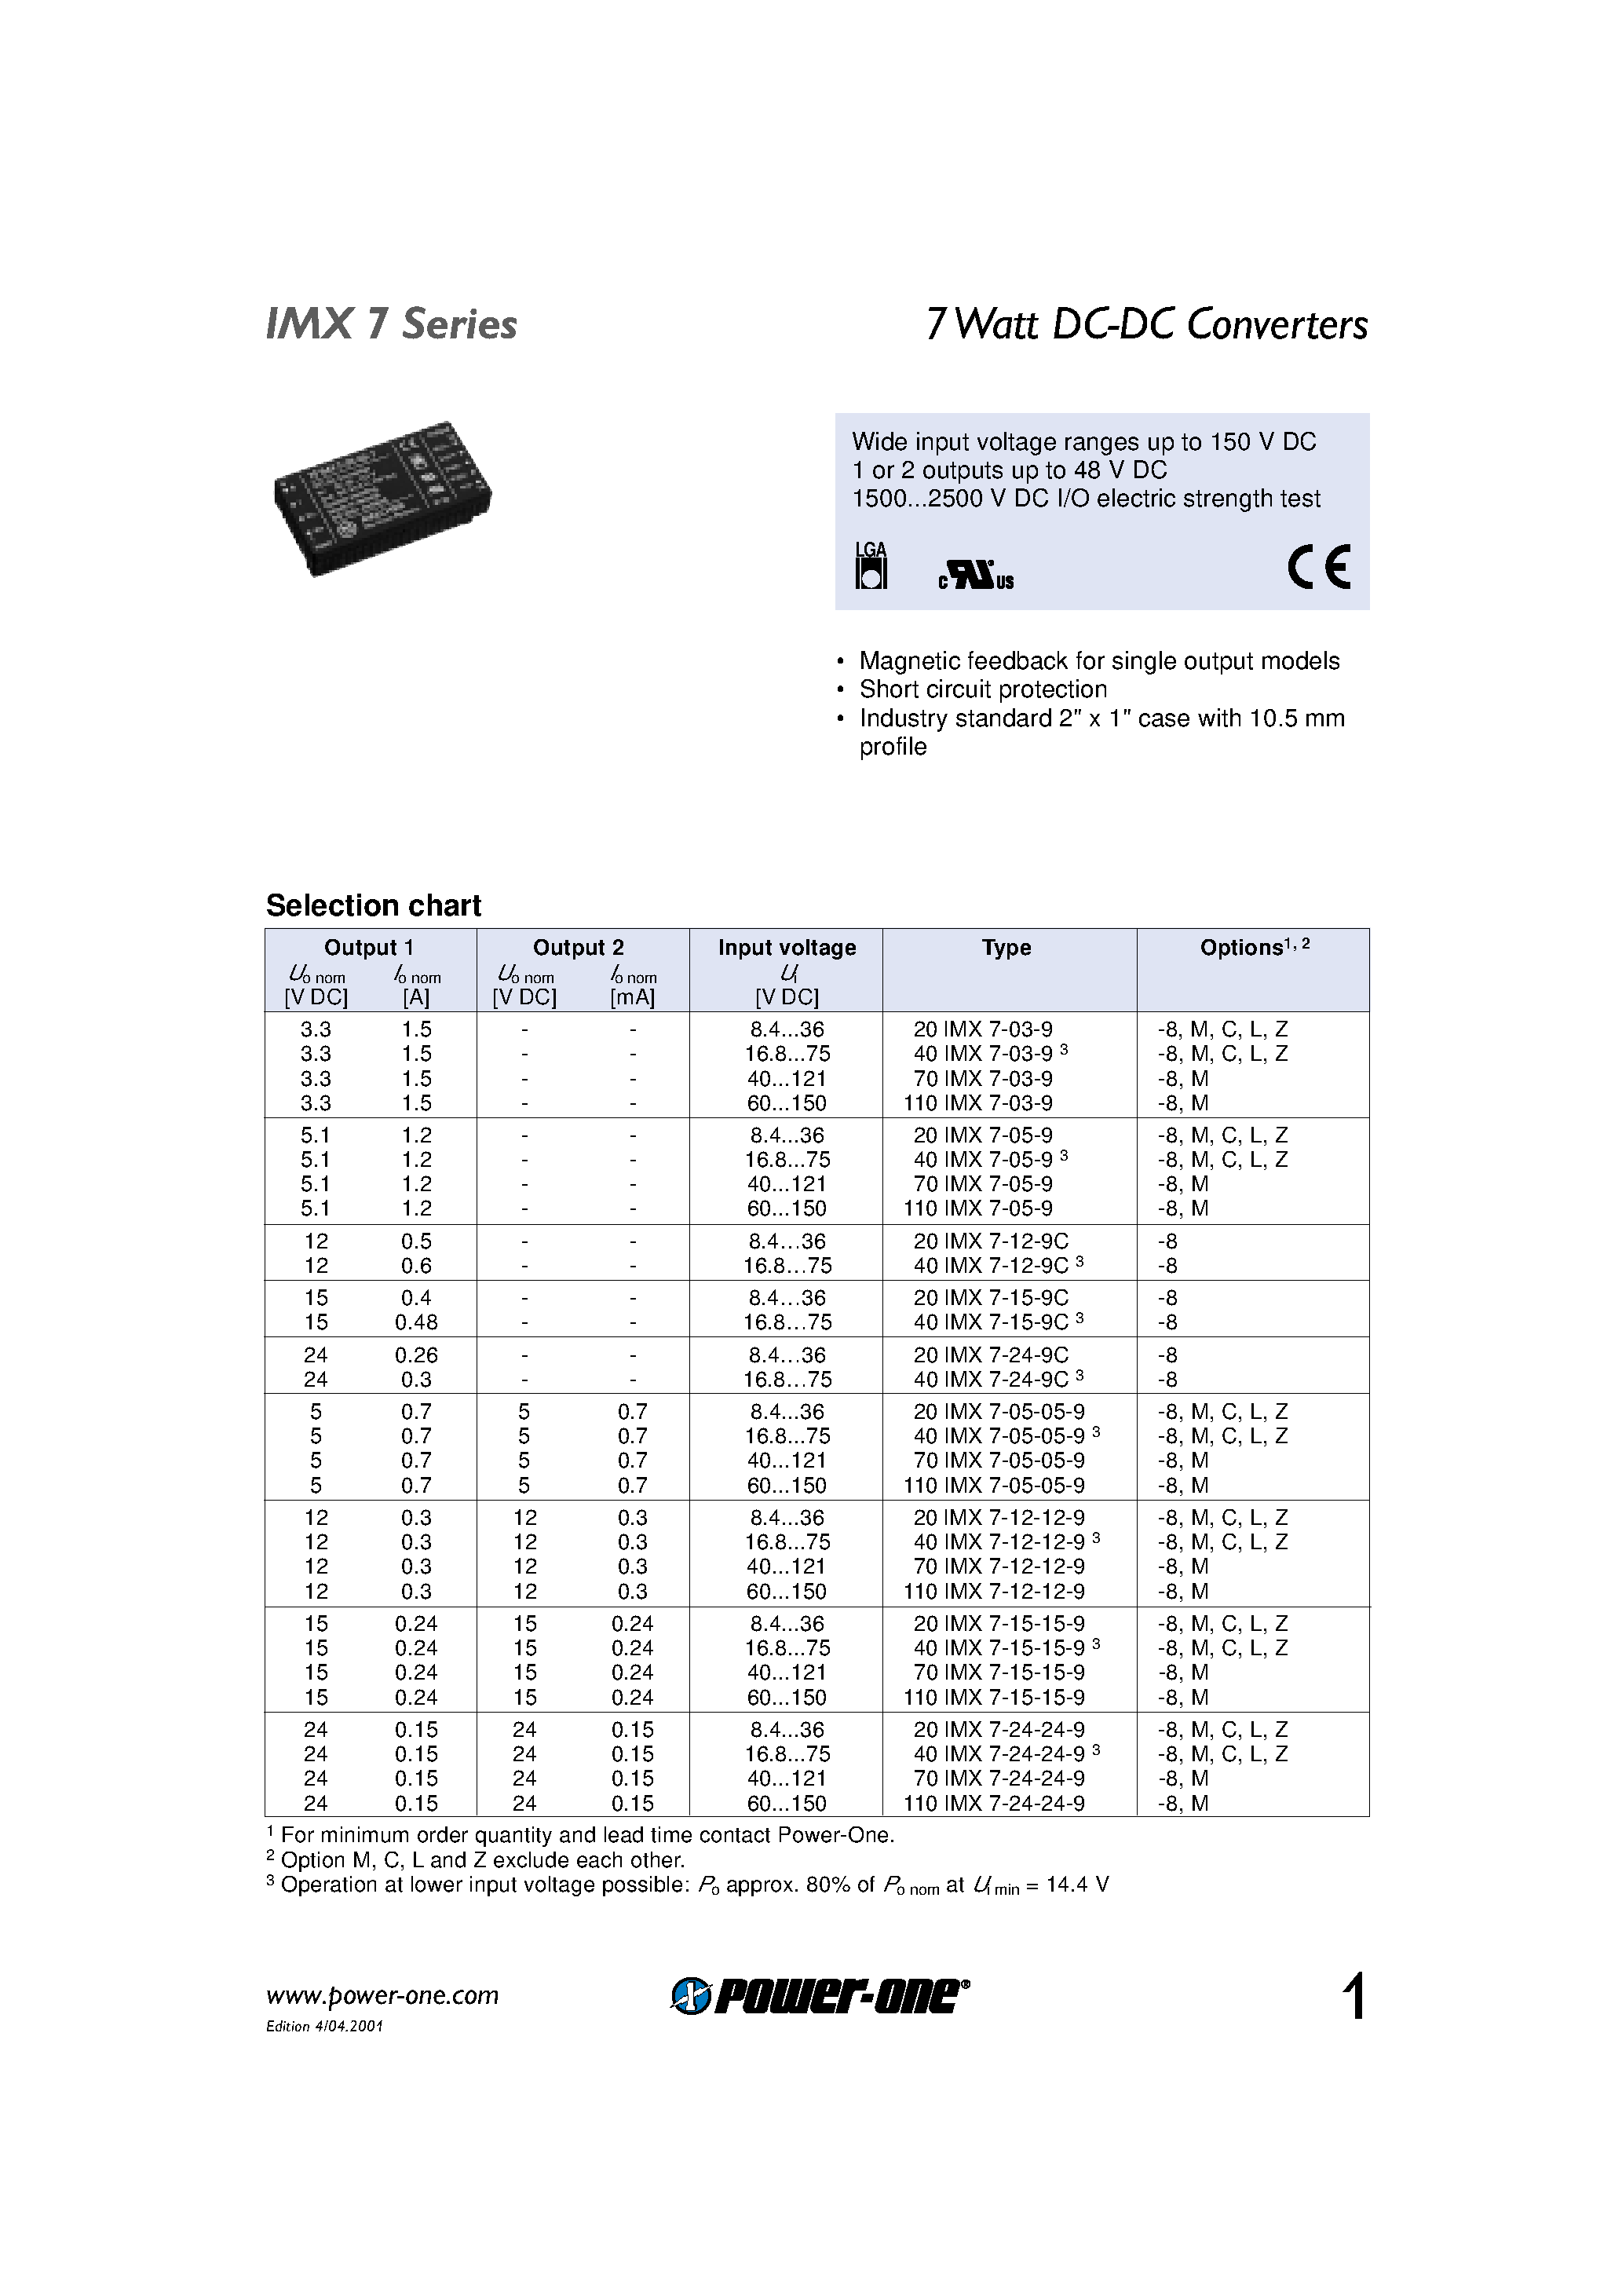 Datasheet 40IMX7-05-05-9 - 7 Watt DC-DC Converters page 1